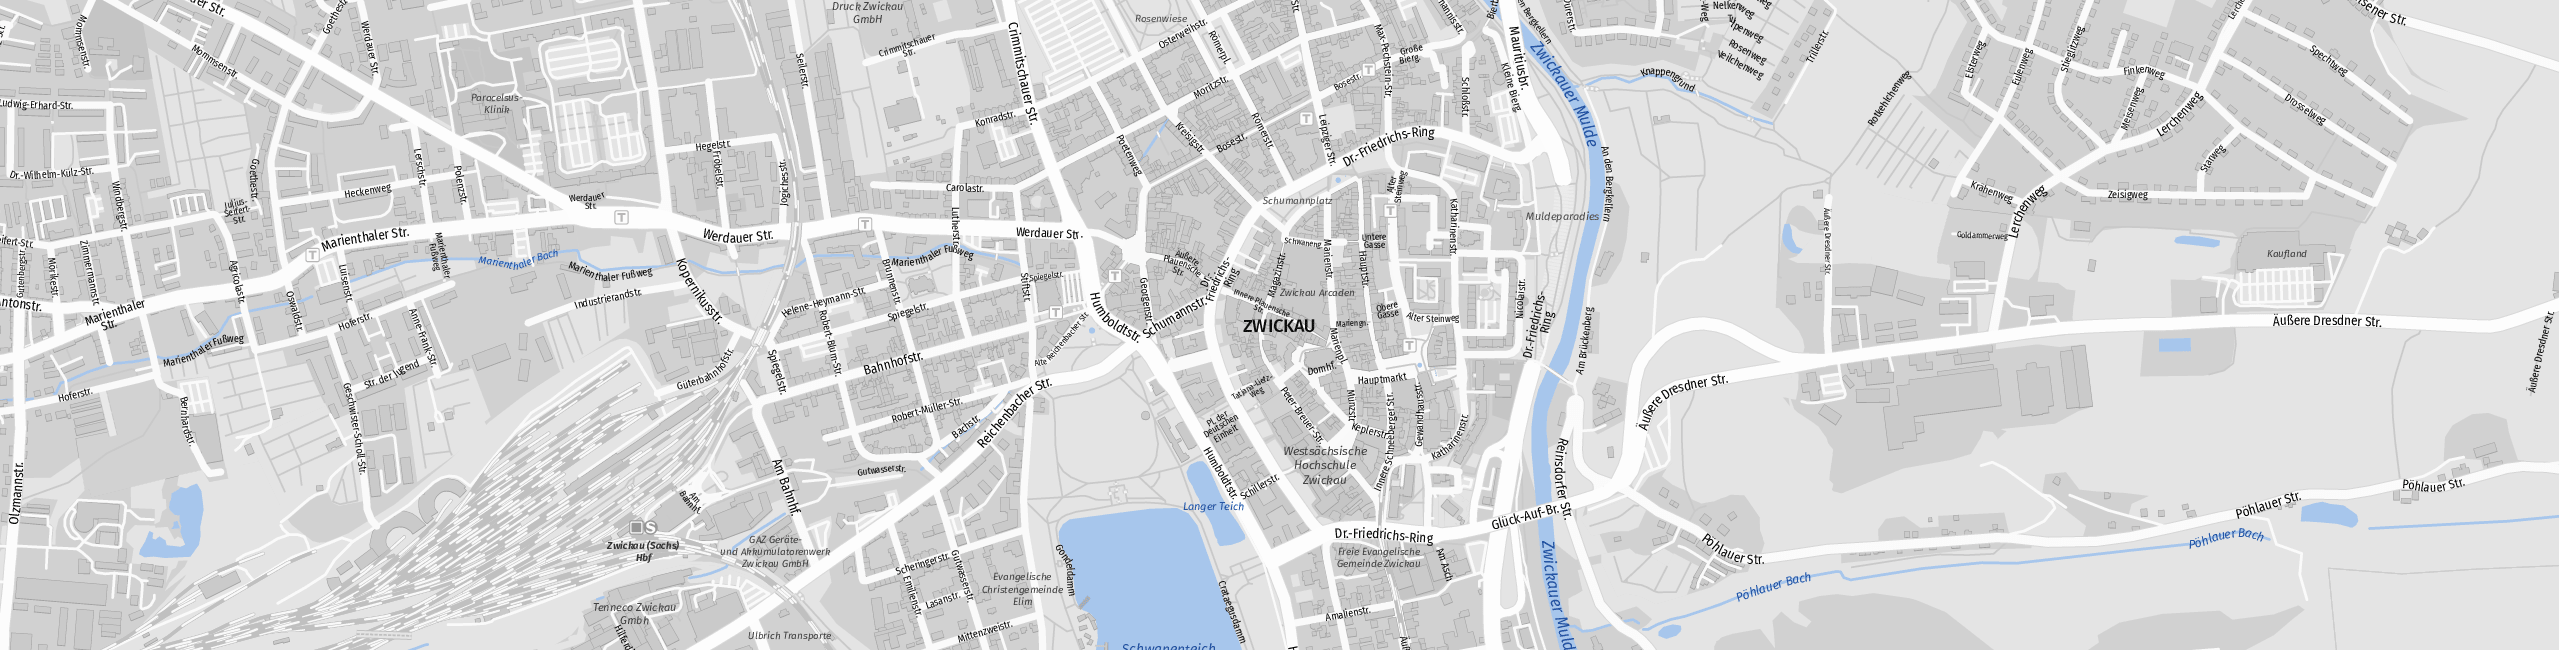 Stadtplan Zwickau zum Downloaden.